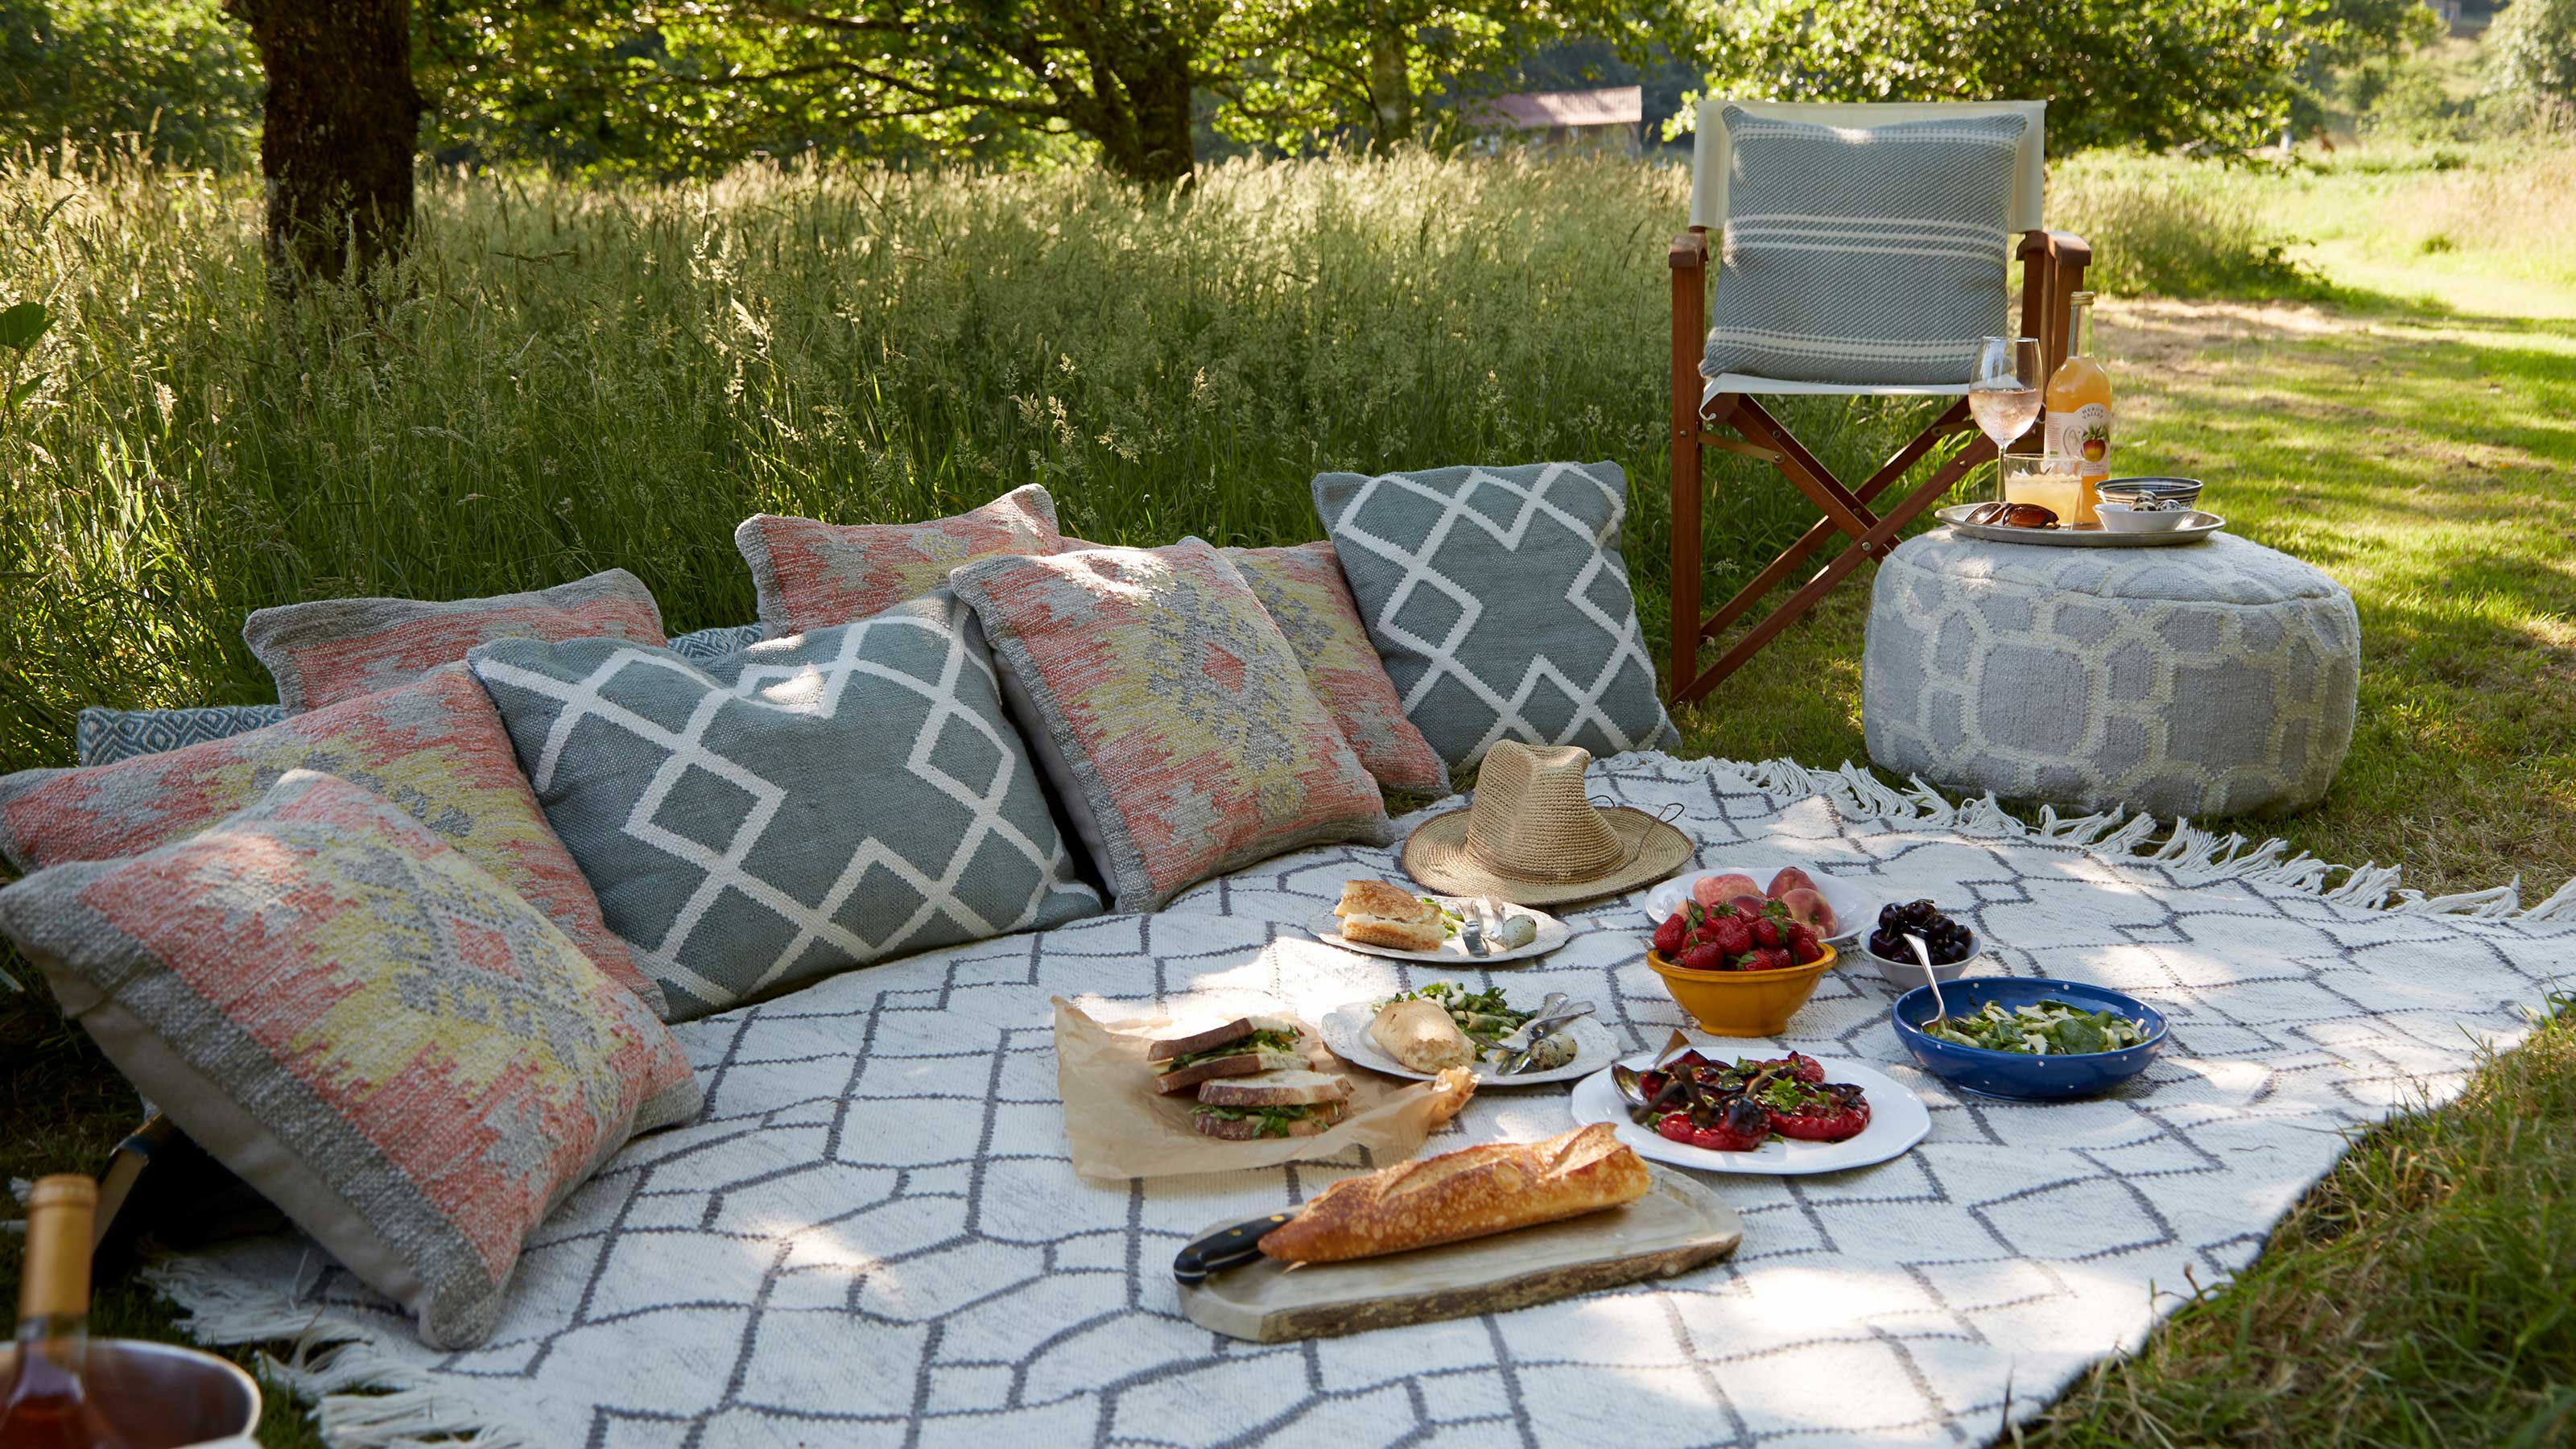 Pack up a backyard picnic